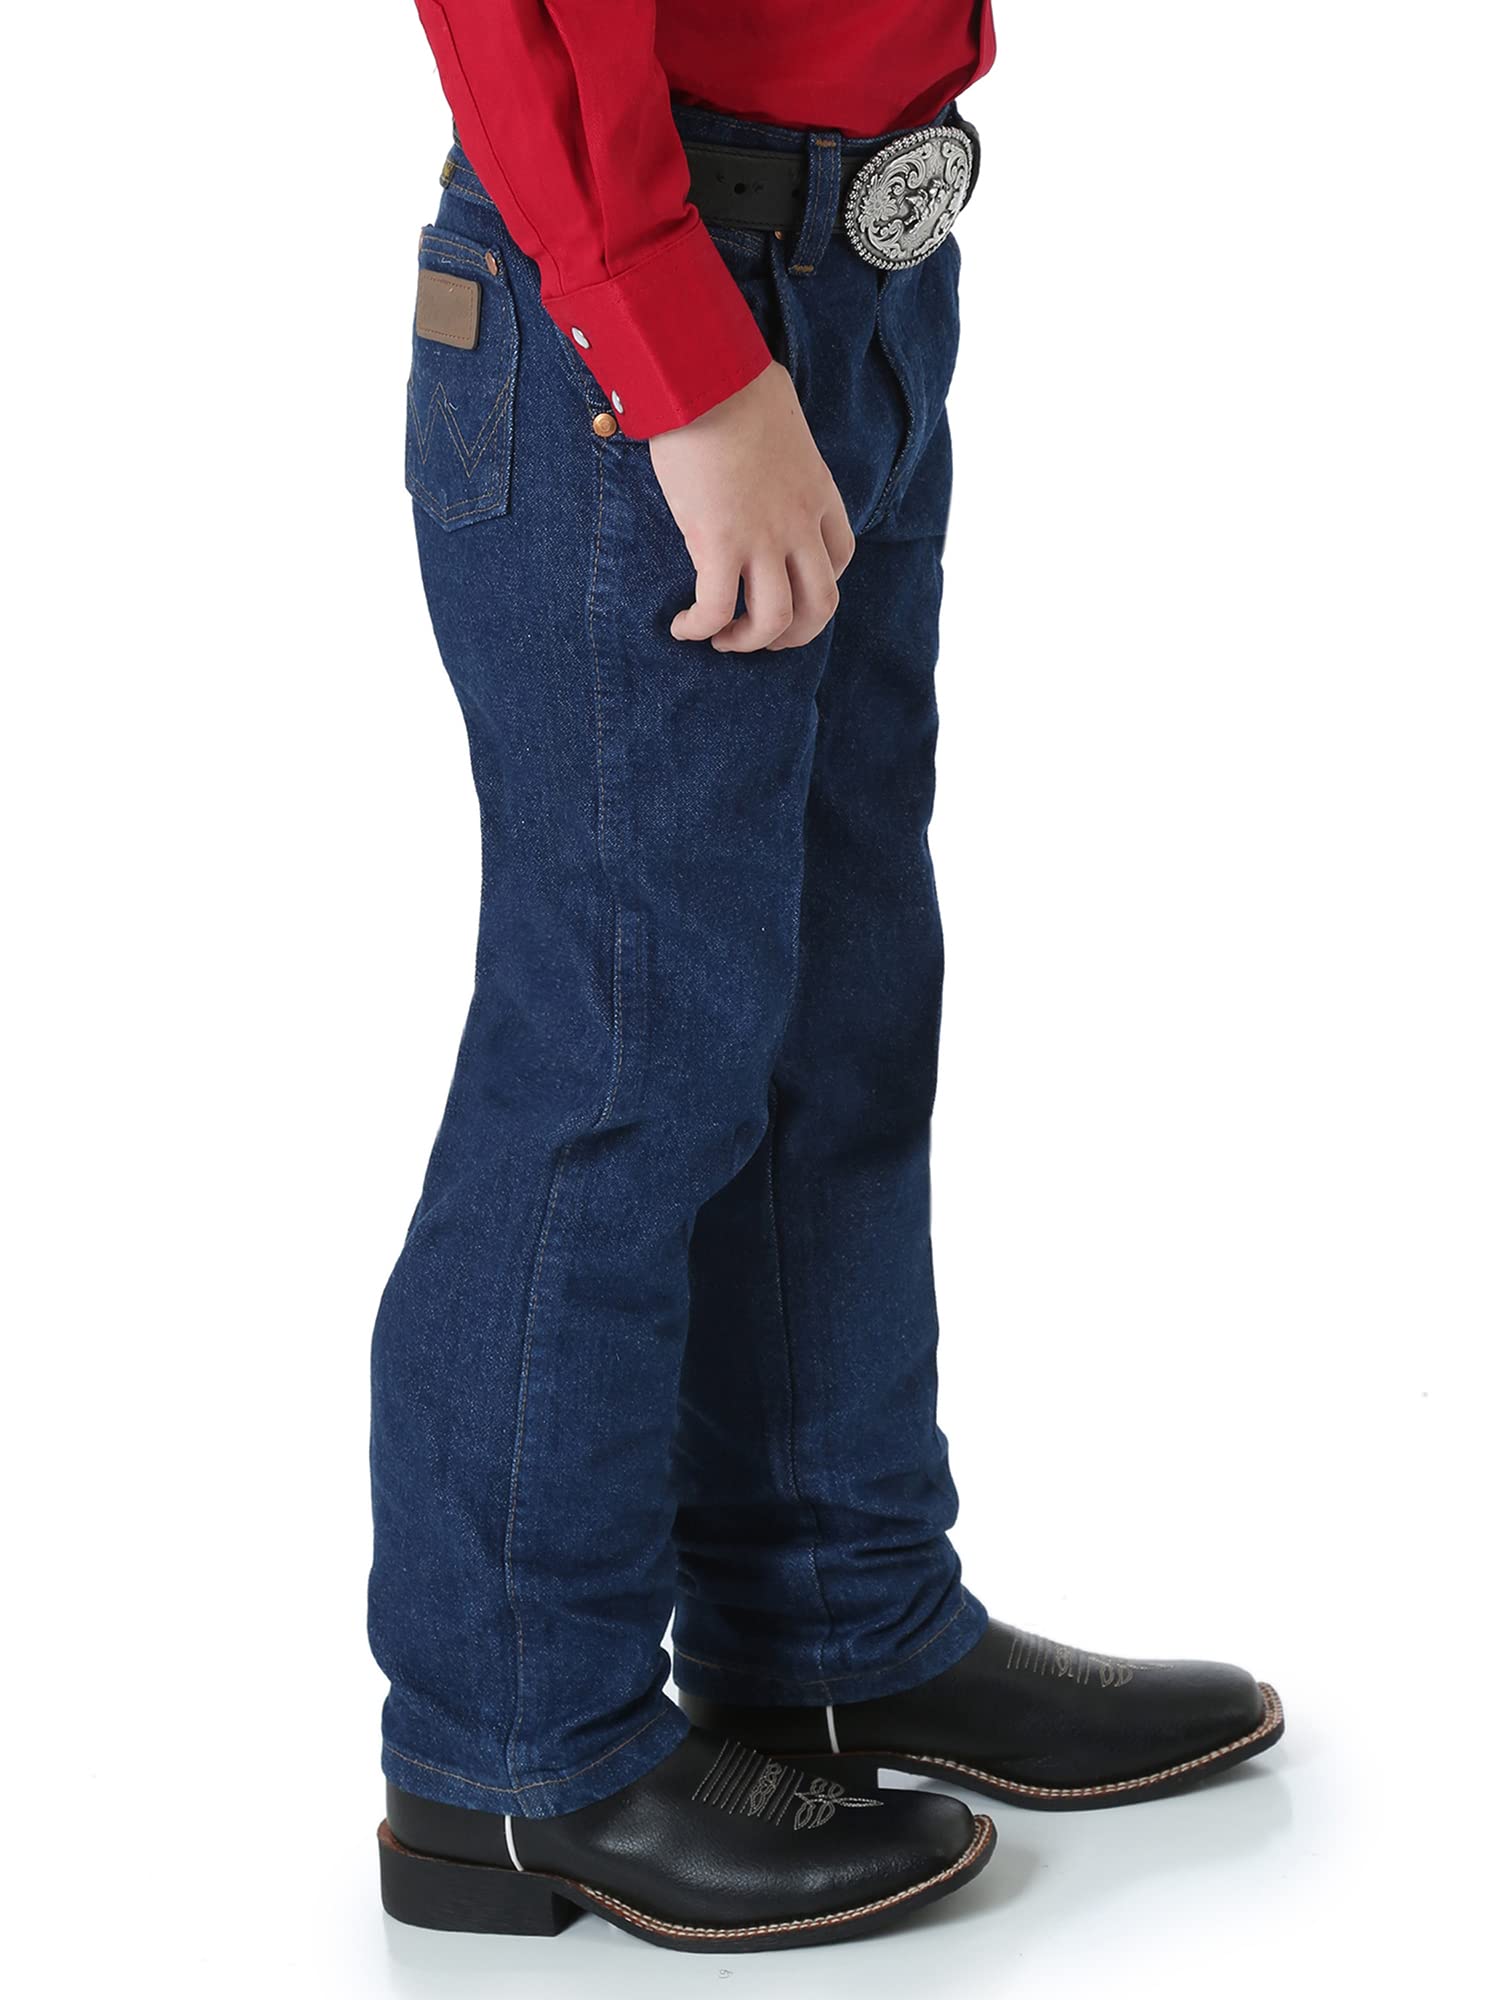 Wrangler Boys' 13MWZ Cowboy Cut Original Fit Jean